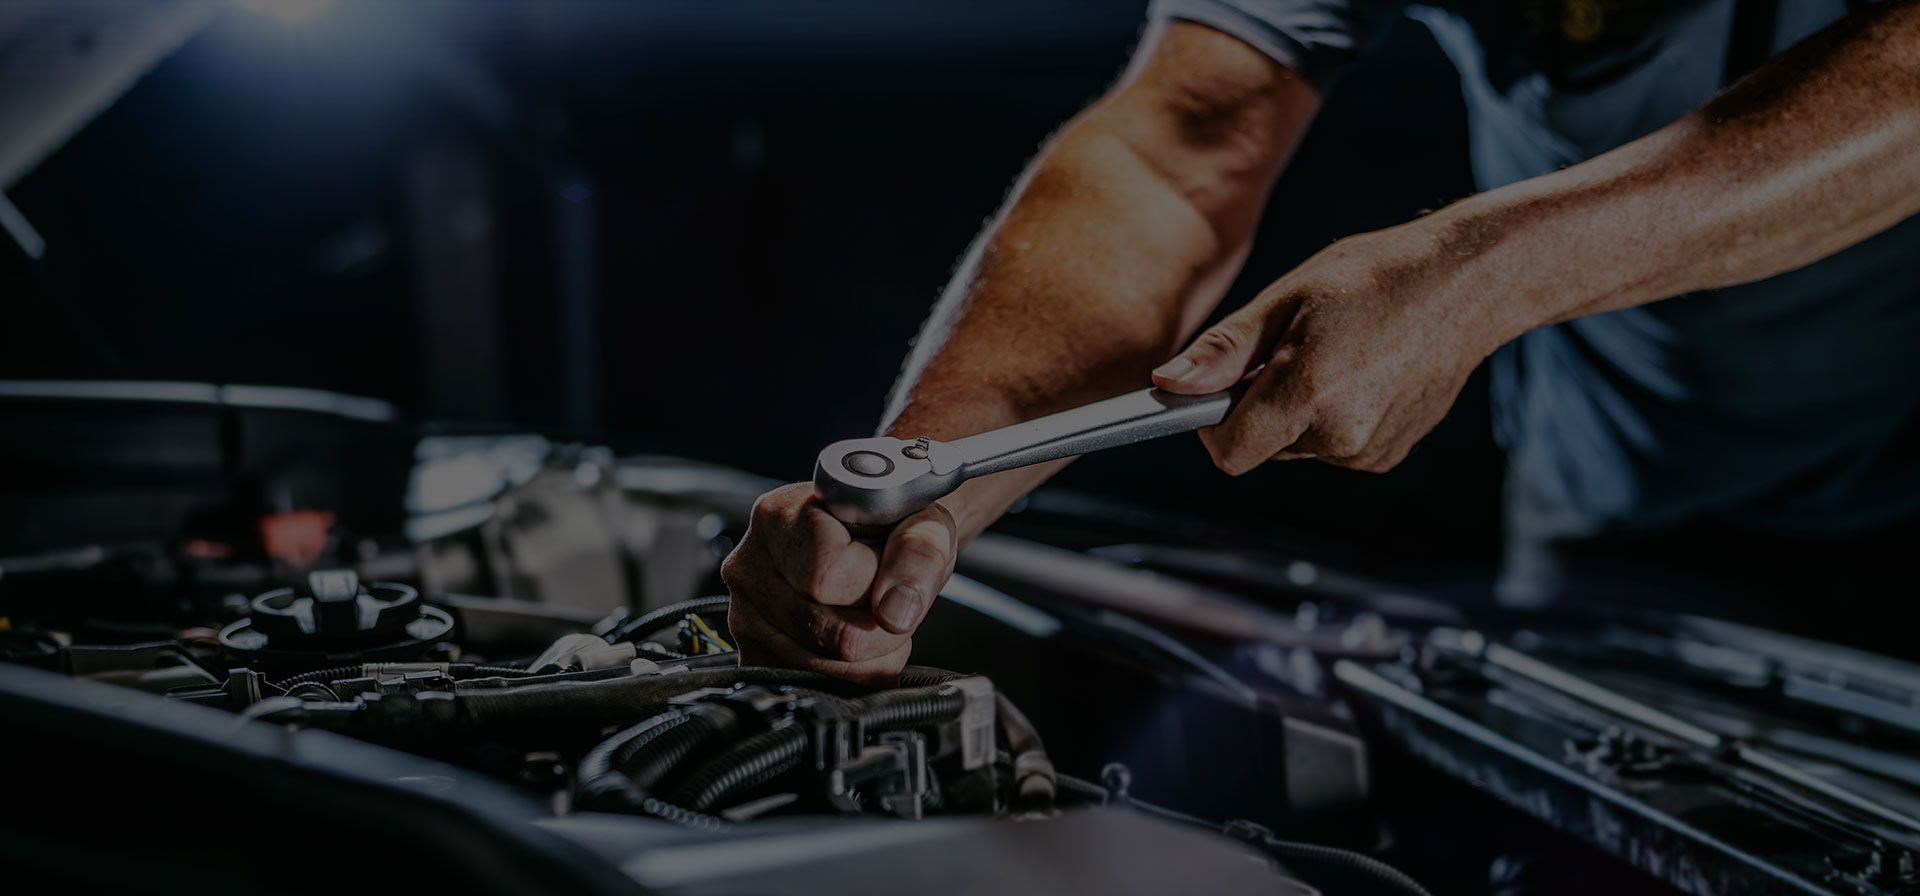 worker's compensation insurance for auto repair technicians